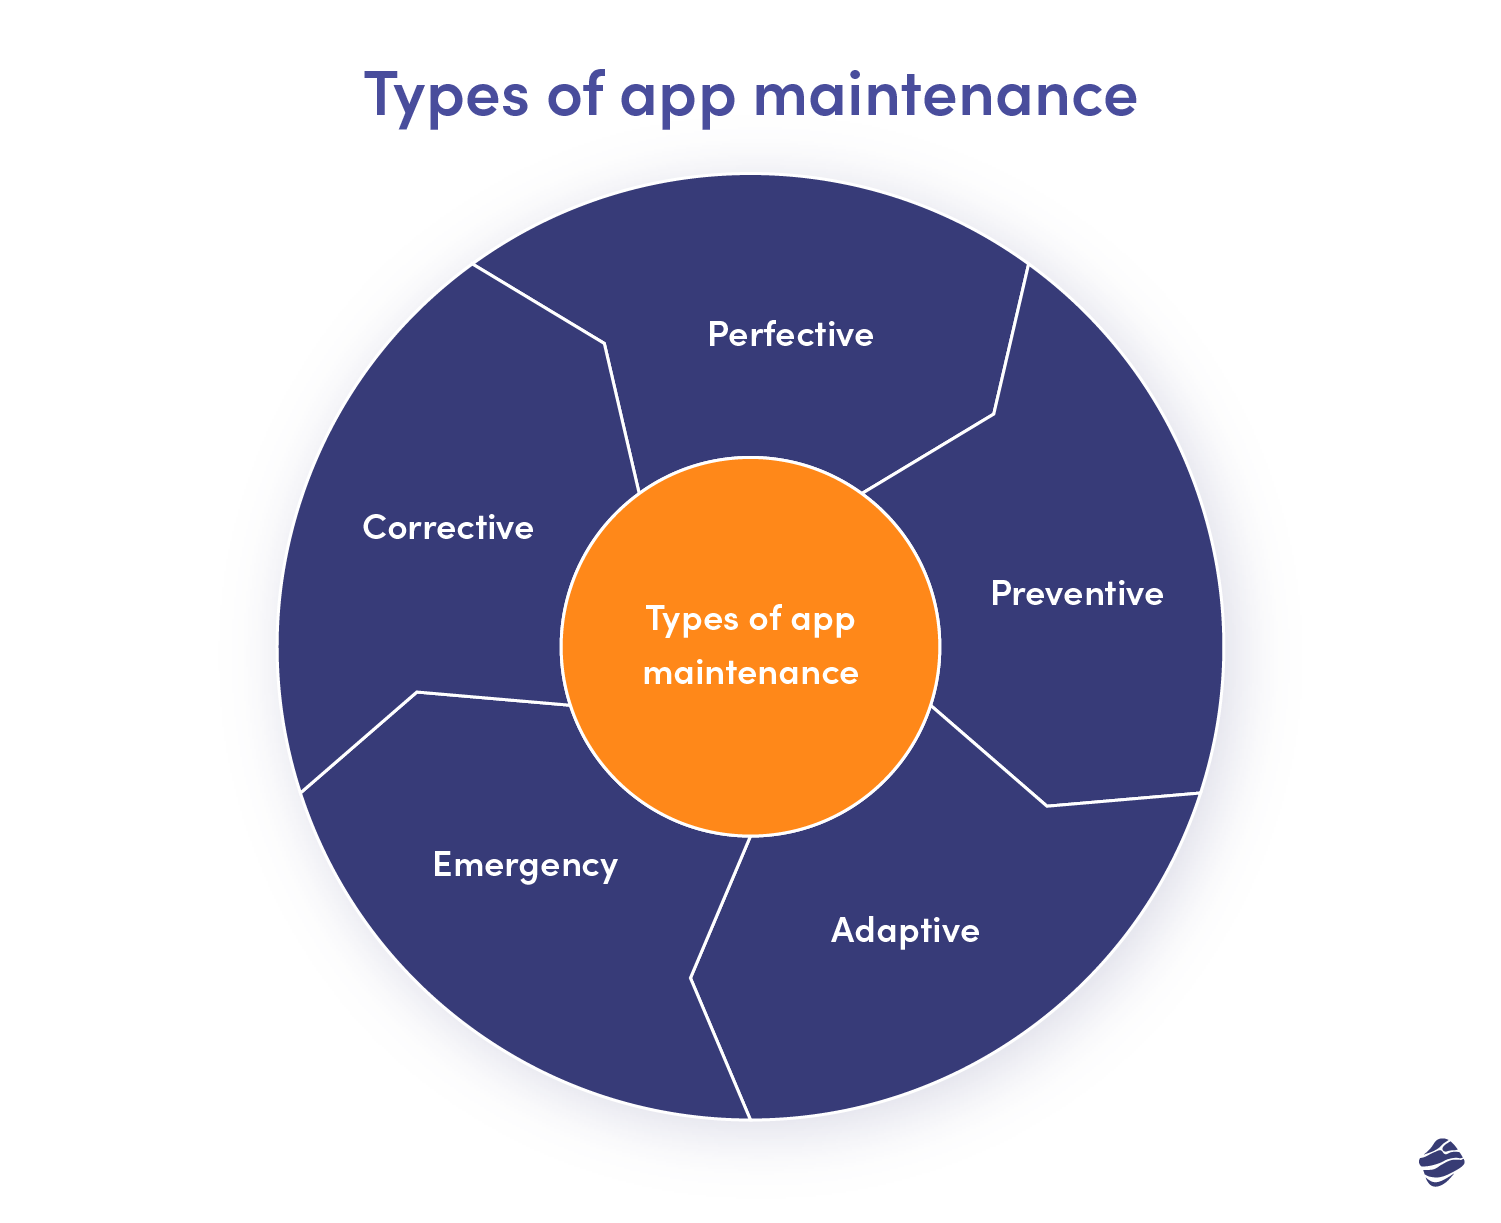 Types of app maintenance